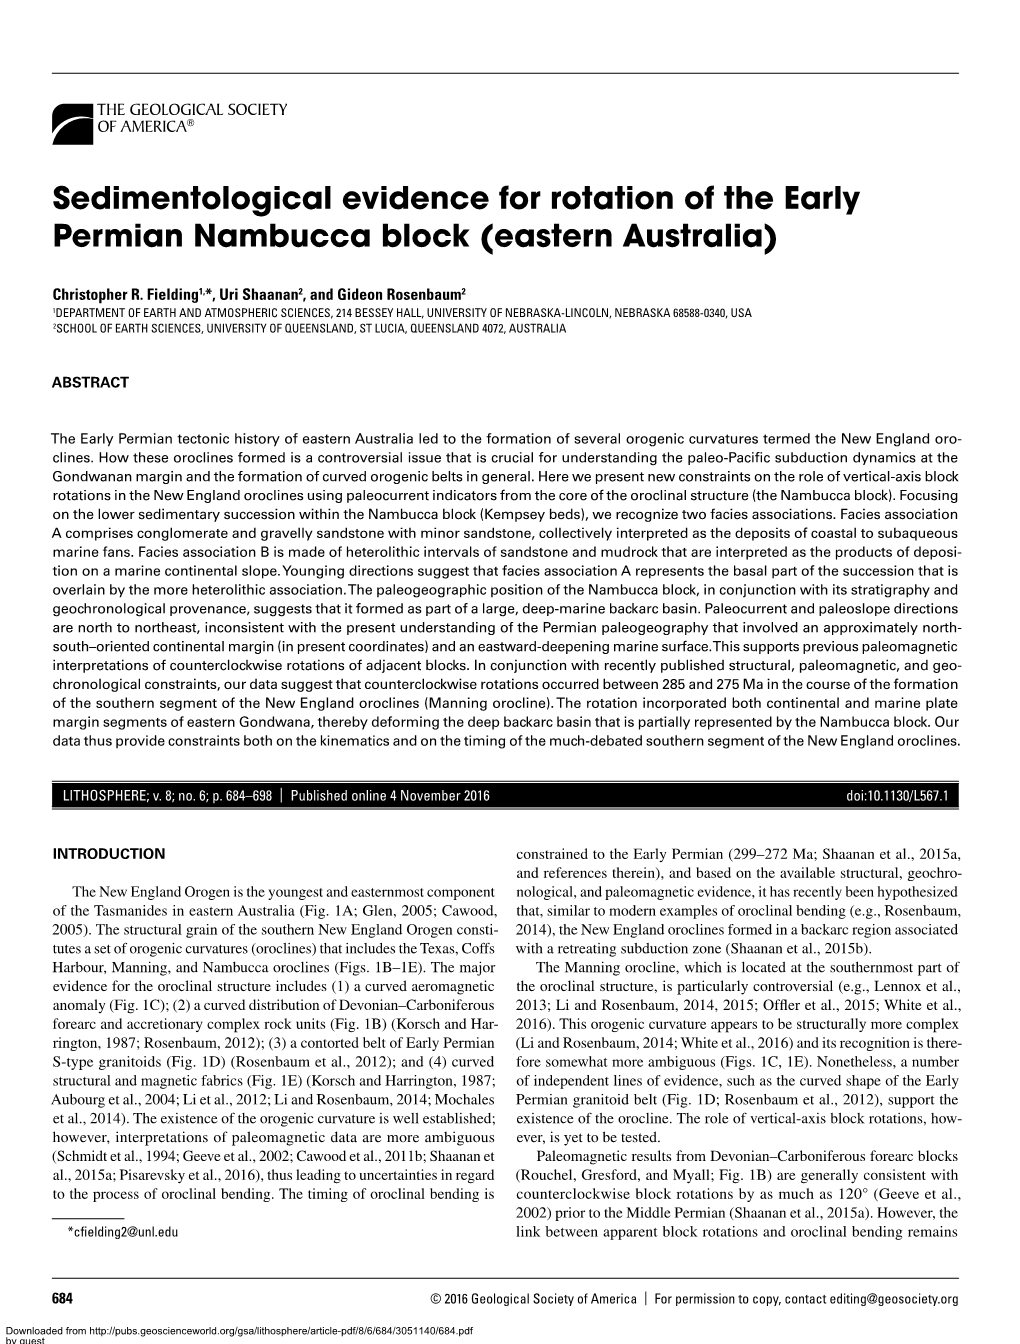 Sedimentological Evidence for Rotation of the Early Permian Nambucca Block (Eastern Australia)